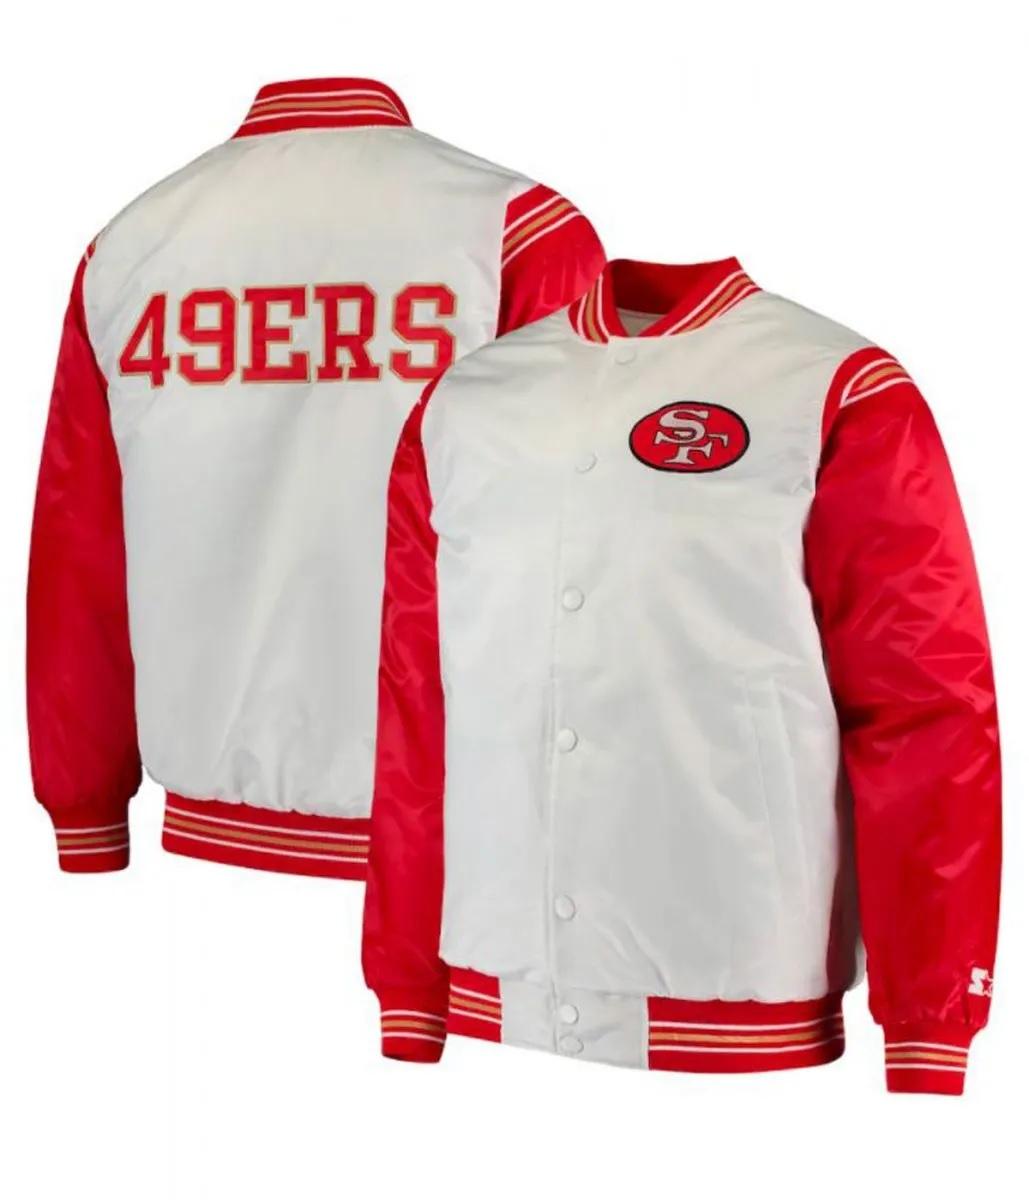 San Francisco 49ers Red And White Starter Varsity Jacket